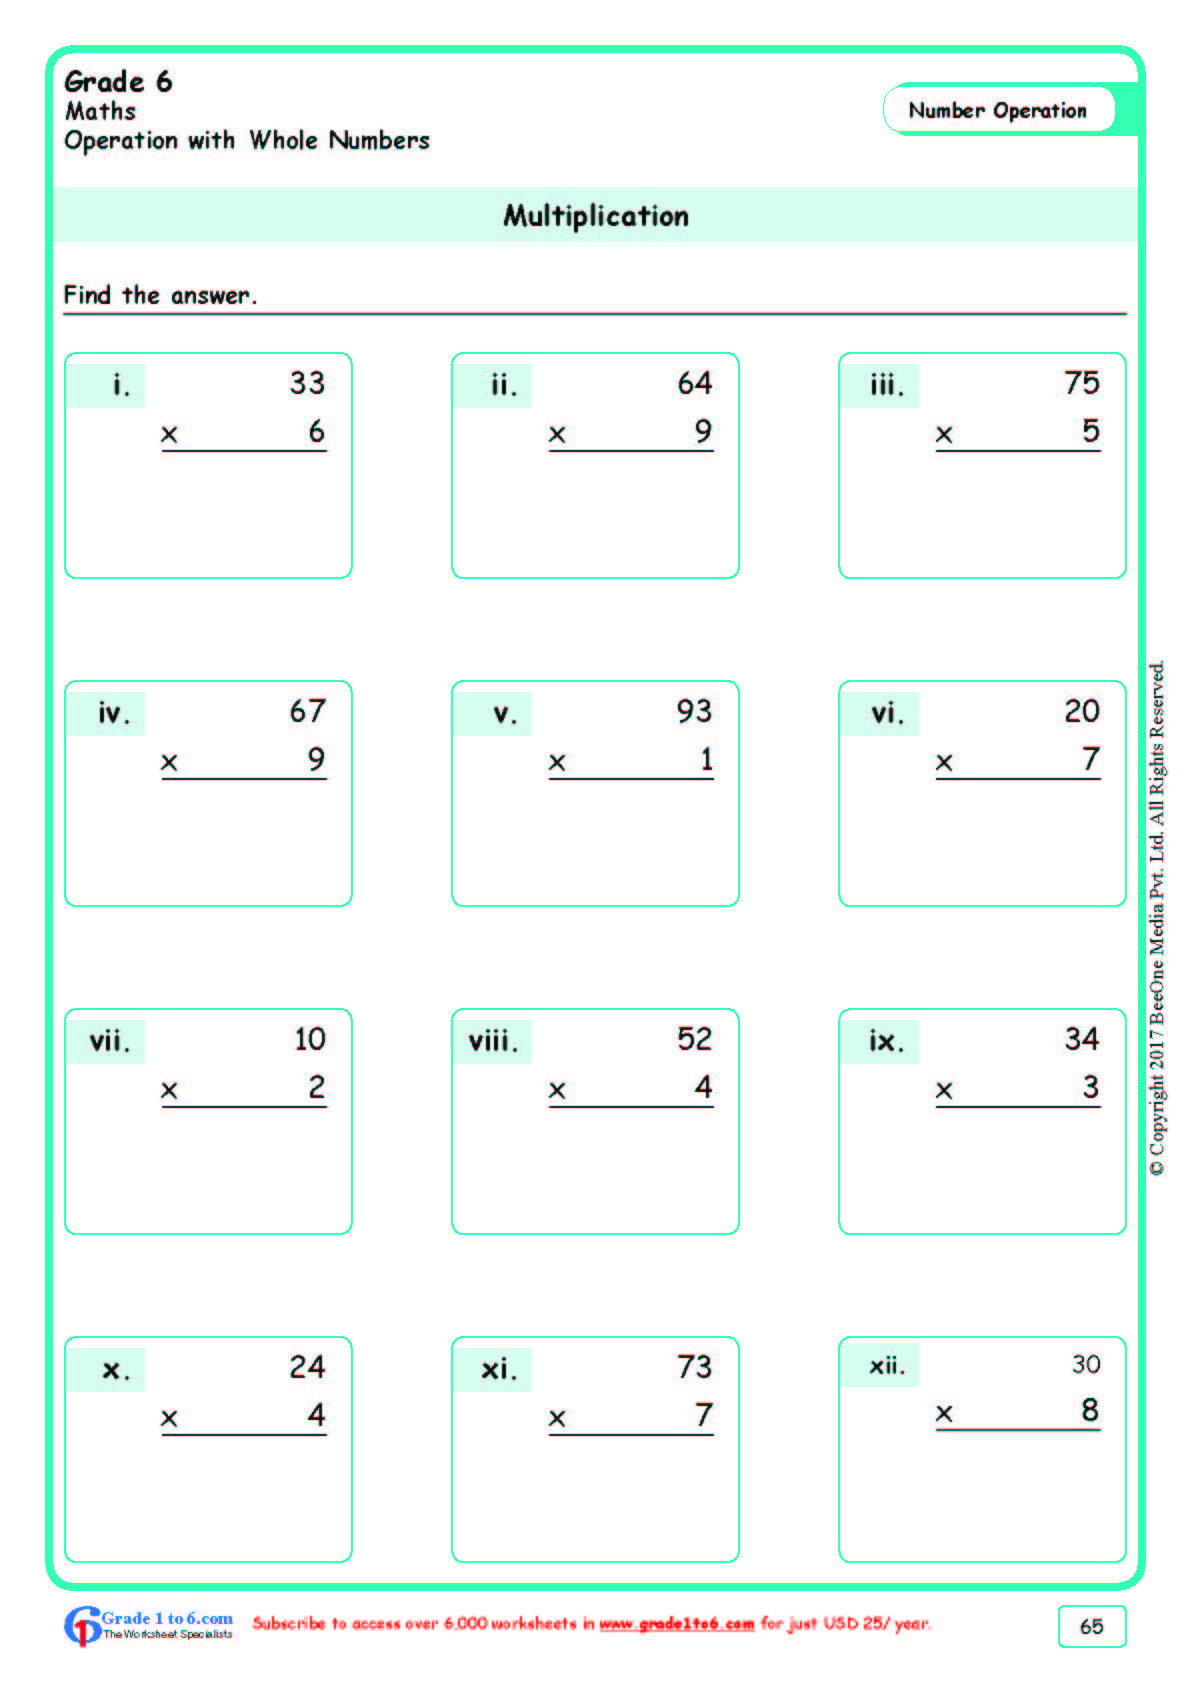 Grade 6|Multiplication Worksheets|www.grade1to6.com